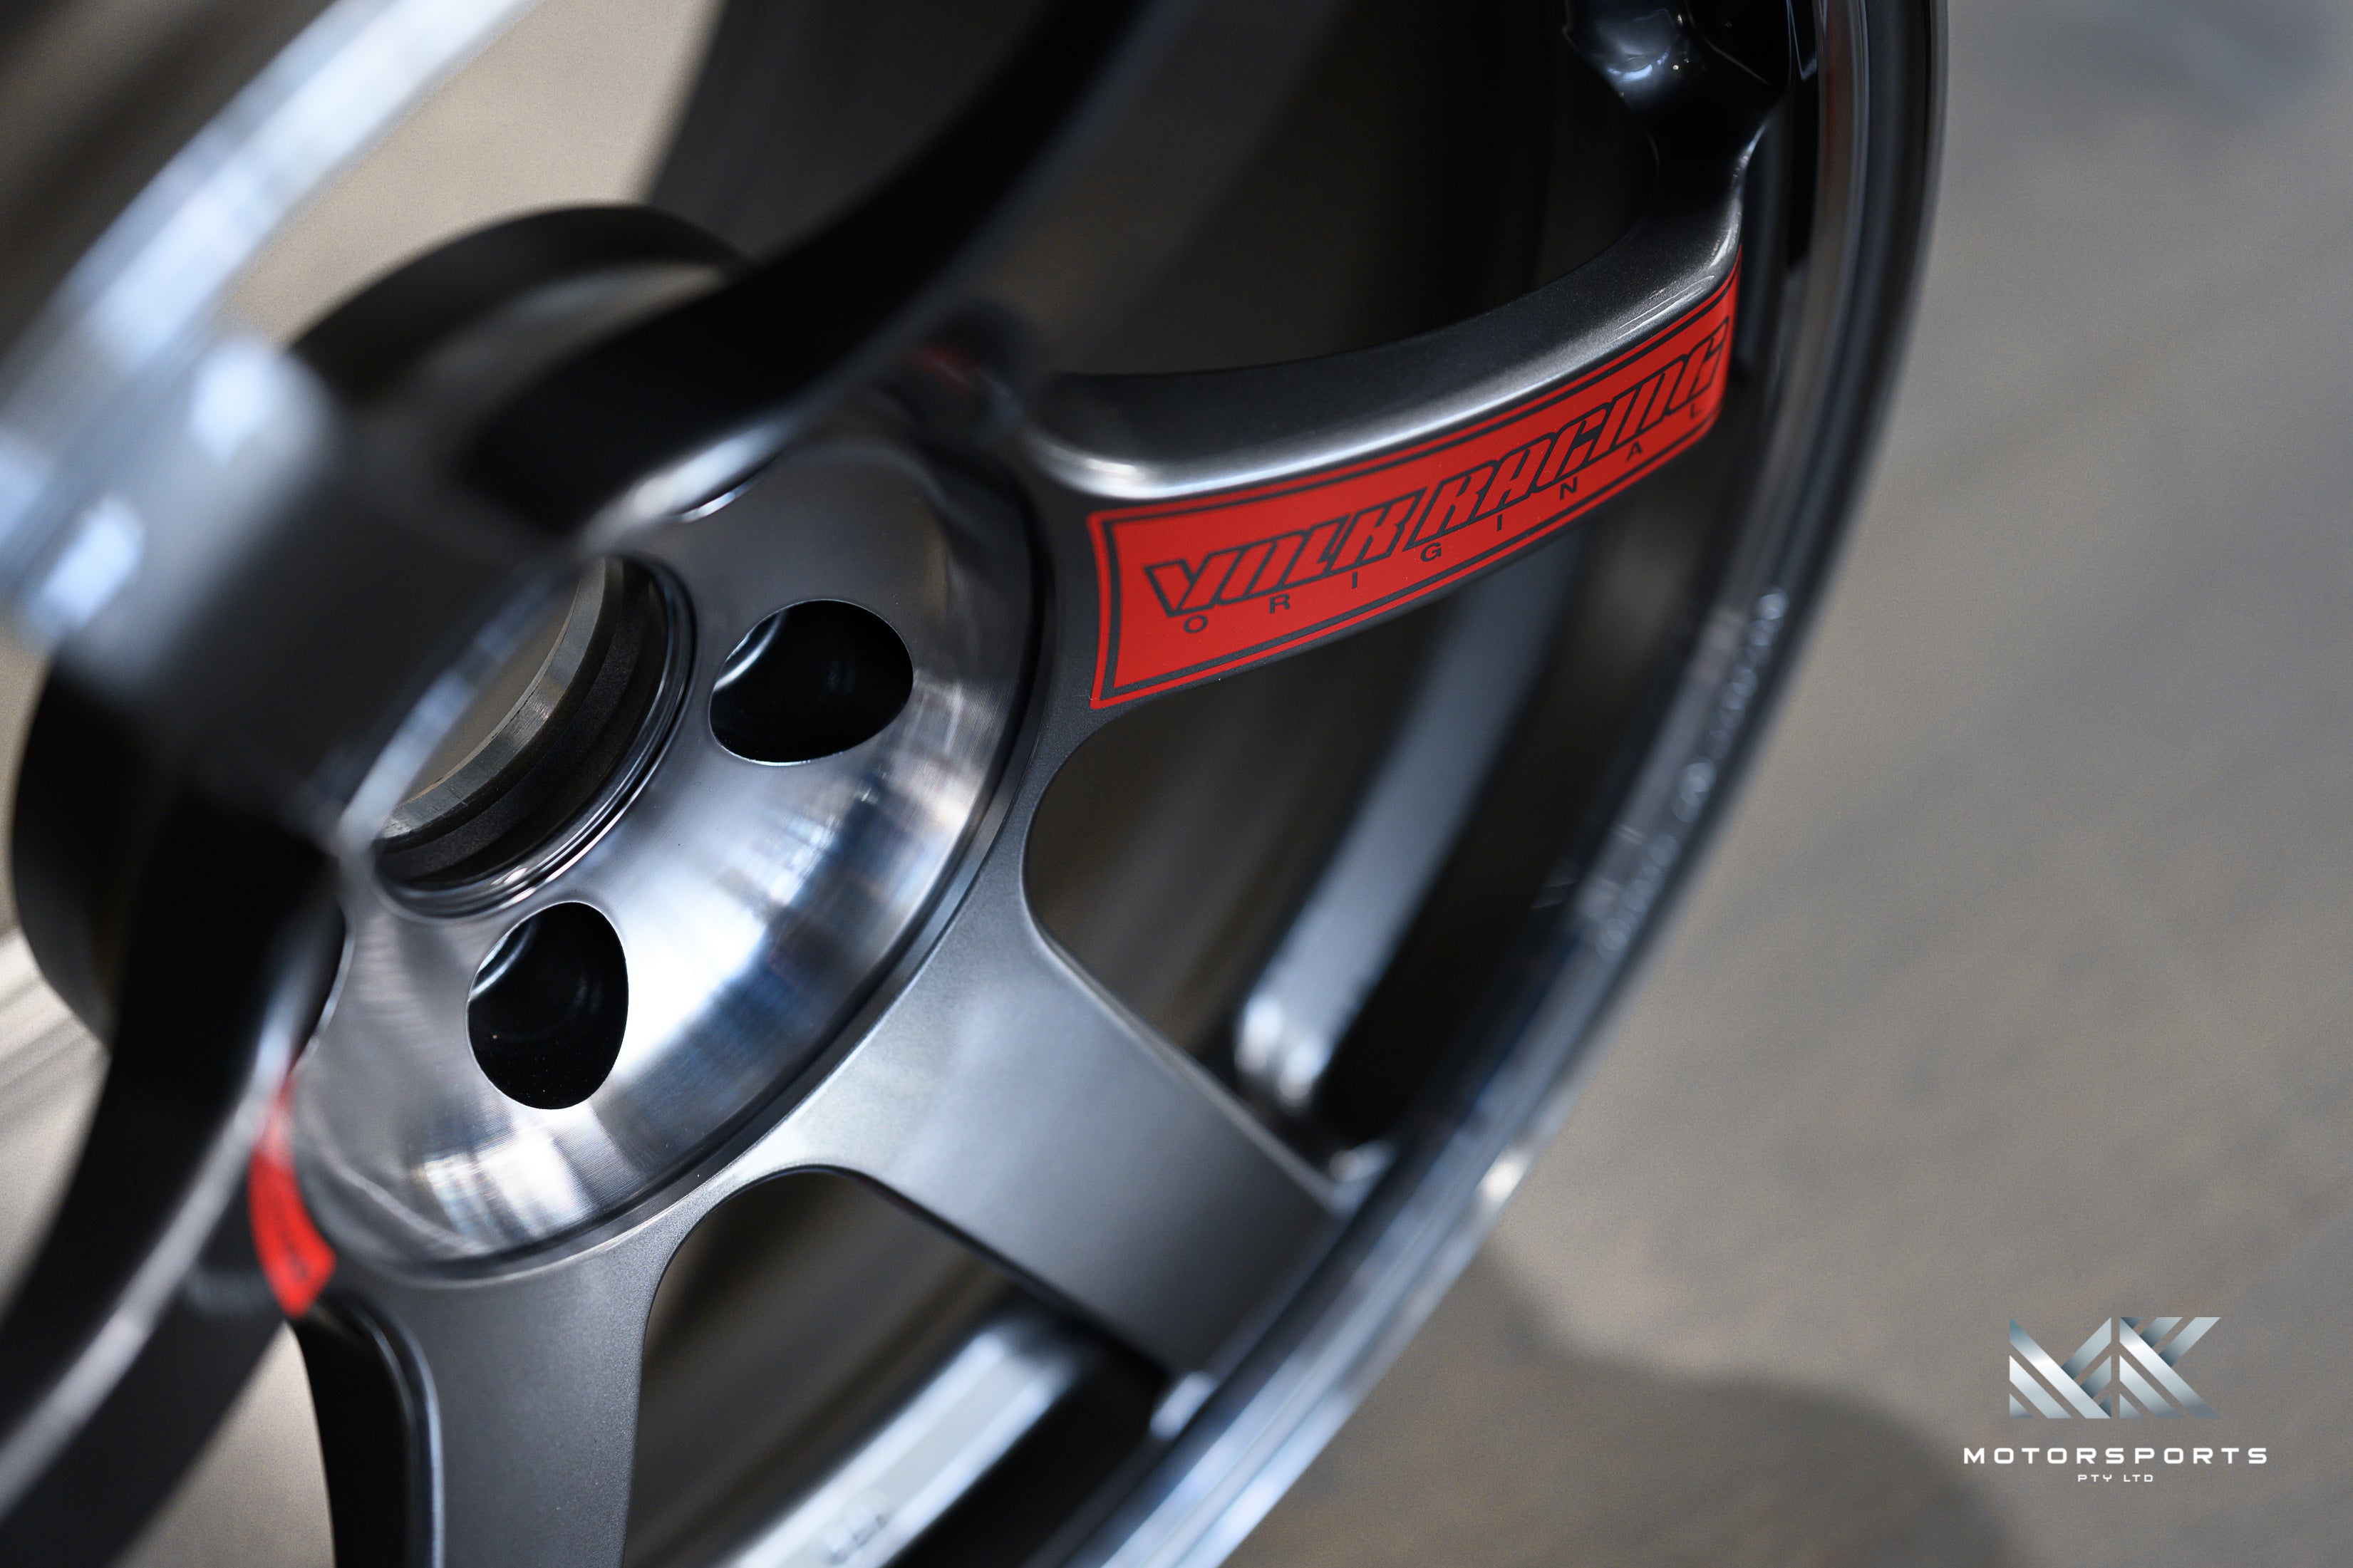 Volk Racing TE37 Saga SL - Premium Wheels from Volk Racing - From just $3850.00! Shop now at MK MOTORSPORTS